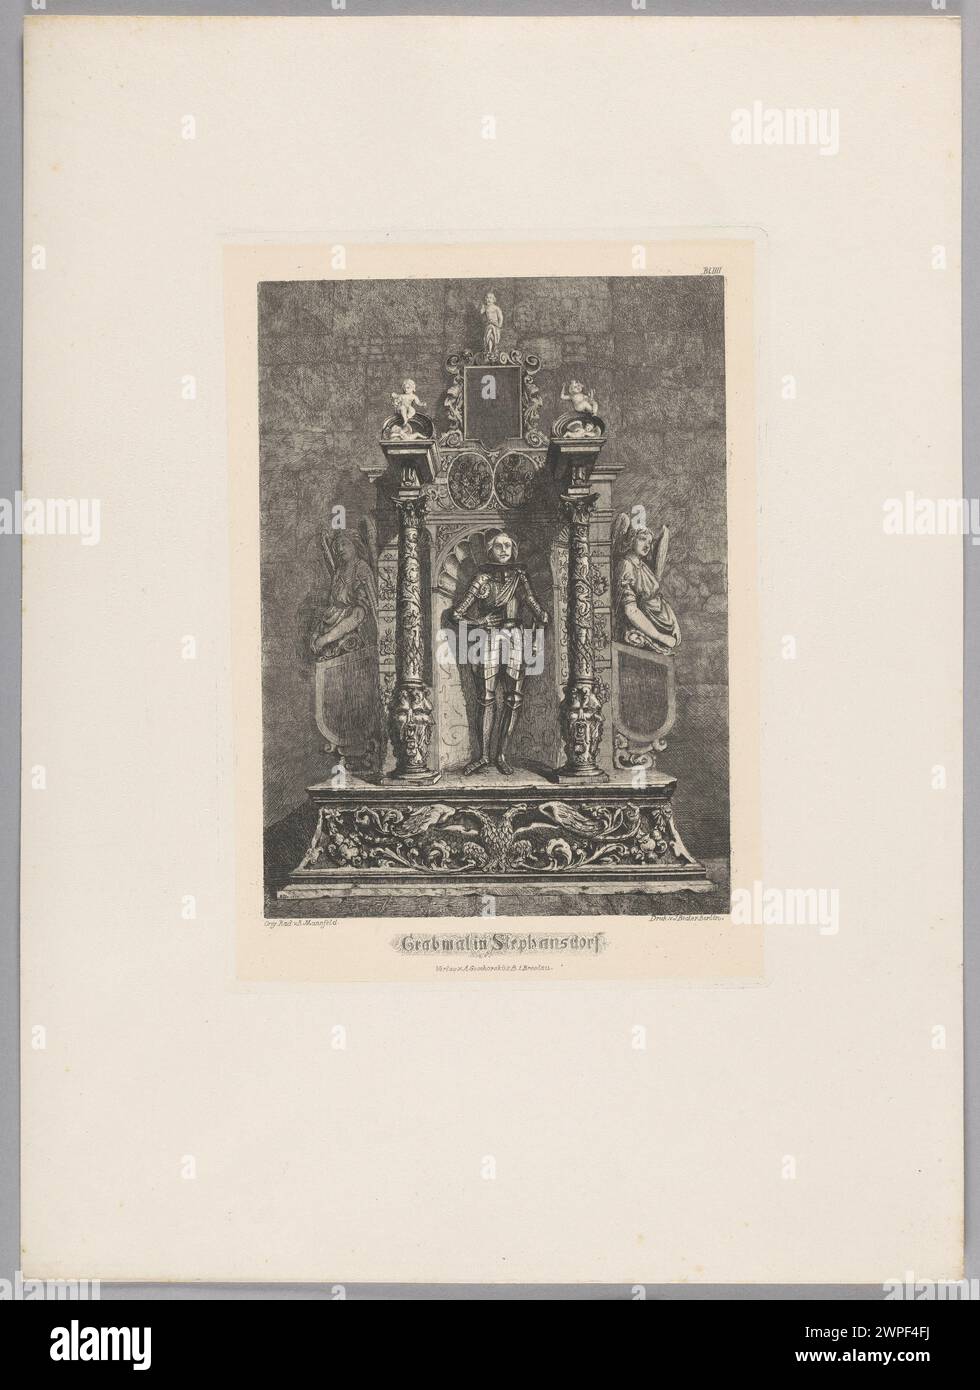 Grabmal in Stephansdorf, de la série : Aus Alt-Breslau und Schlesien ; Mannfeld, Bernhard (1848-1925), Verlag von A. Goschorsky (Wrocław ; maison d'édition ; 1758-CA 1920), Becker, J. (Berlin; AD Princess ; CA 1800-CA 1896) ; 1891 (1850-00-00-1900-00-00); Banque D'Images